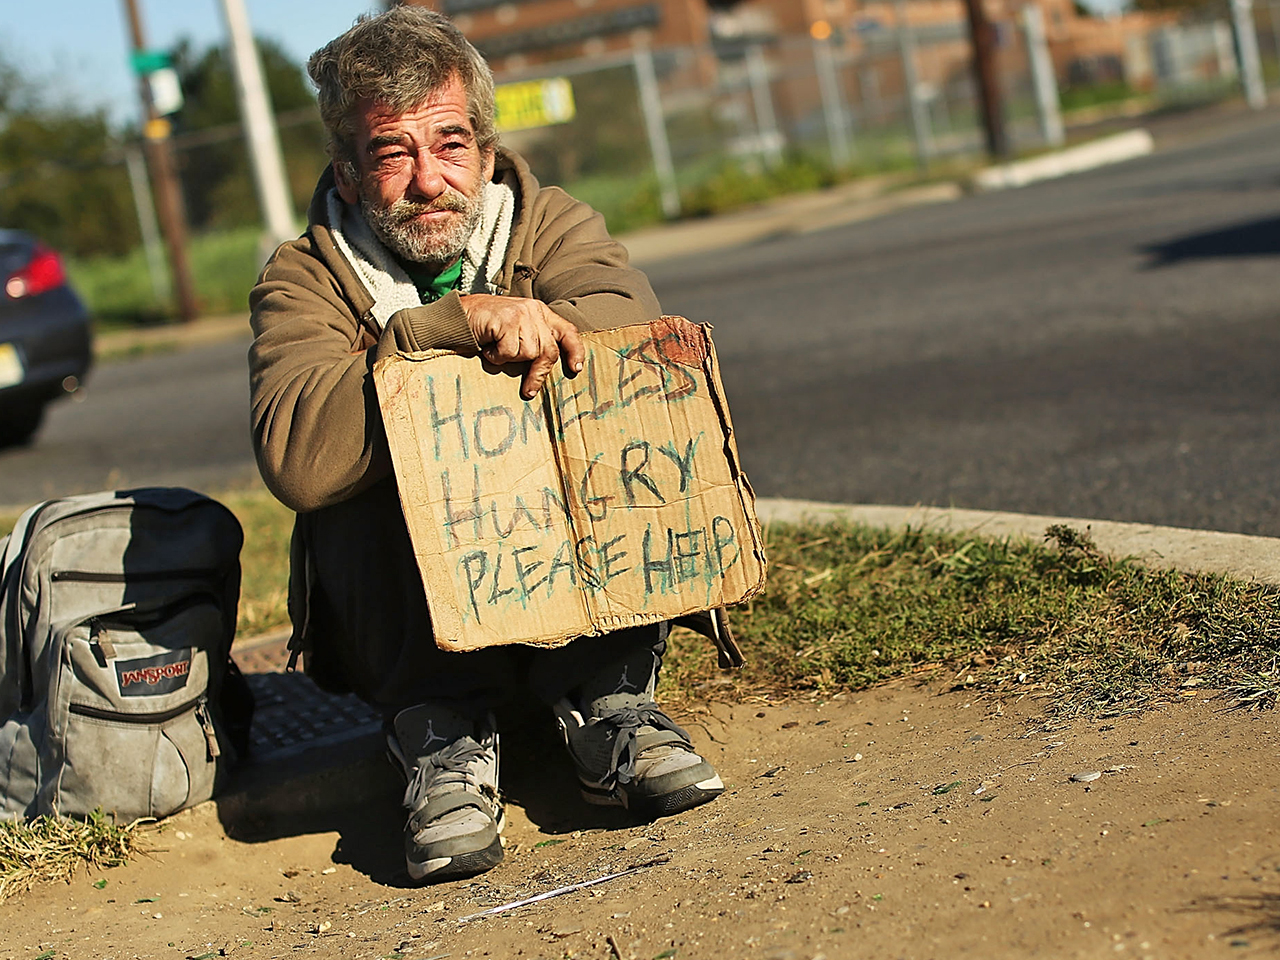 CAMDEN, NJ - OCTOBER 11: A homeless man named Bob waits for donations from ...